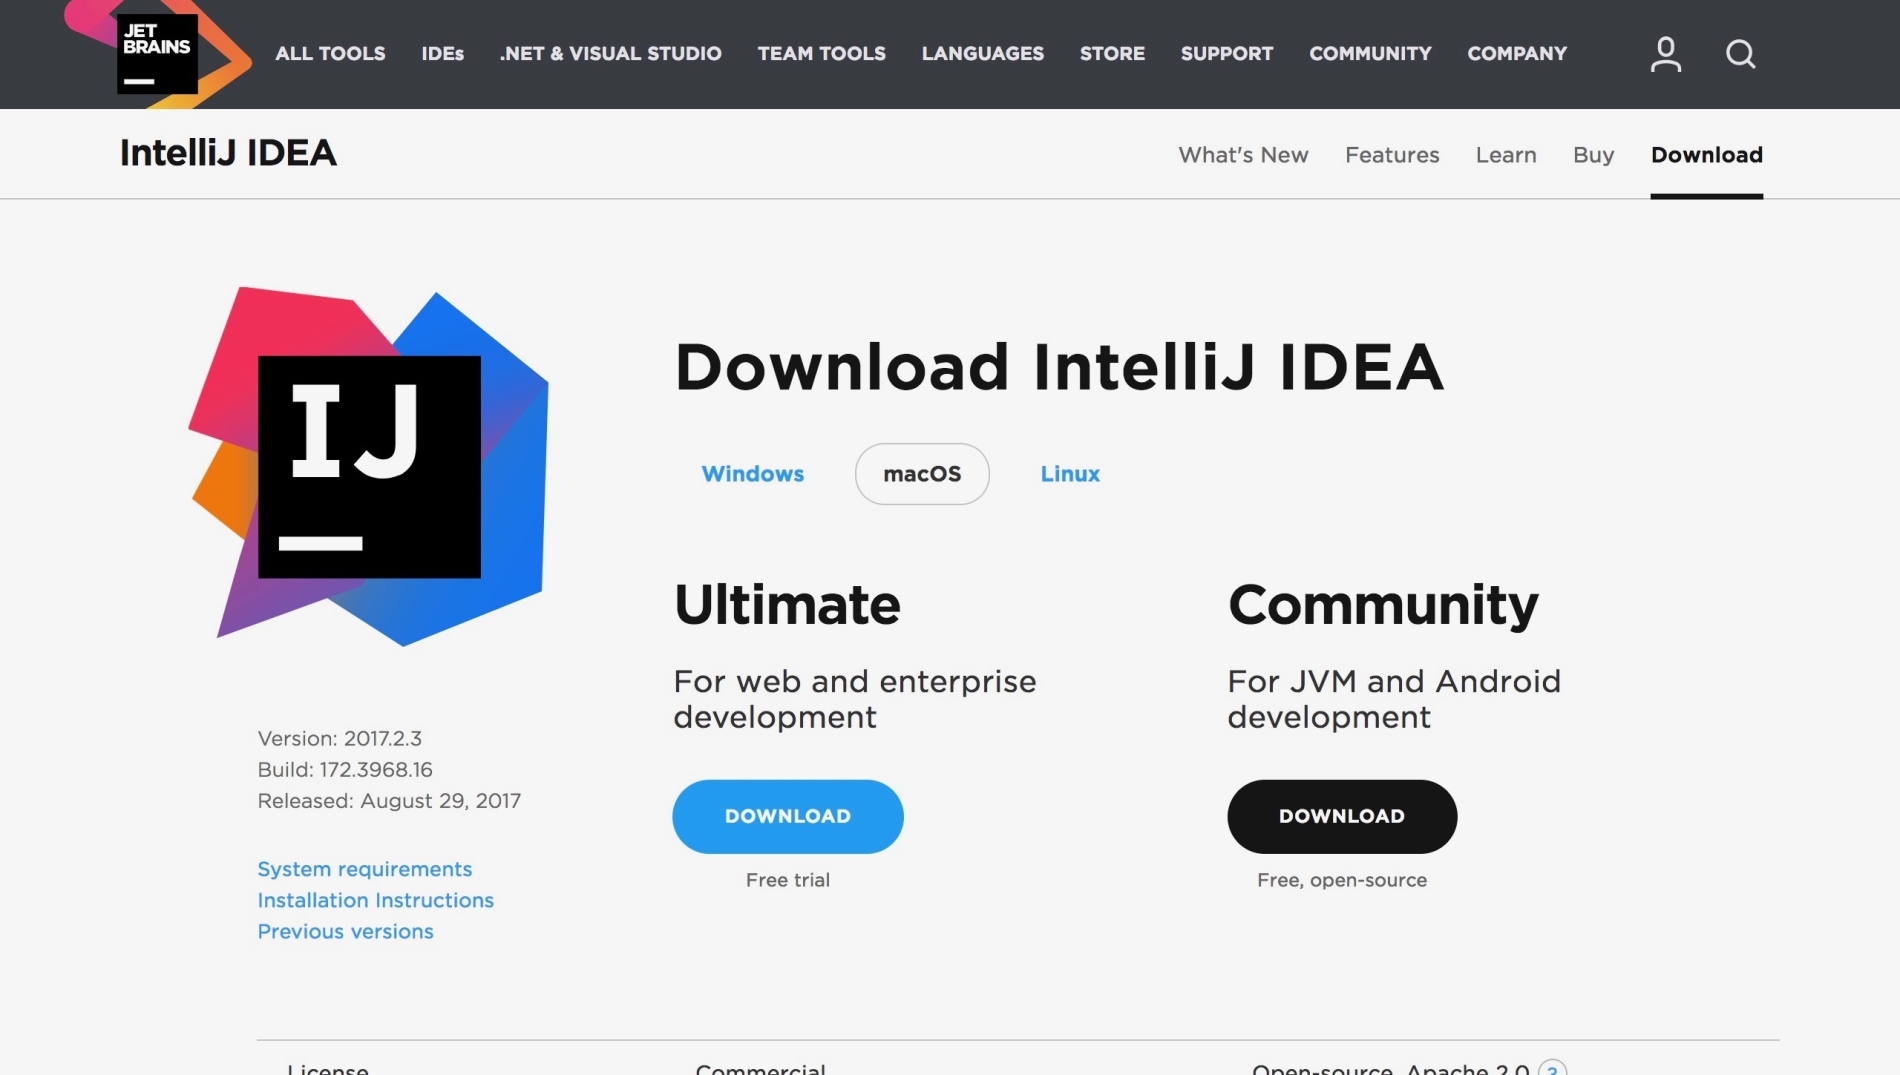 intellij idea community edition web application